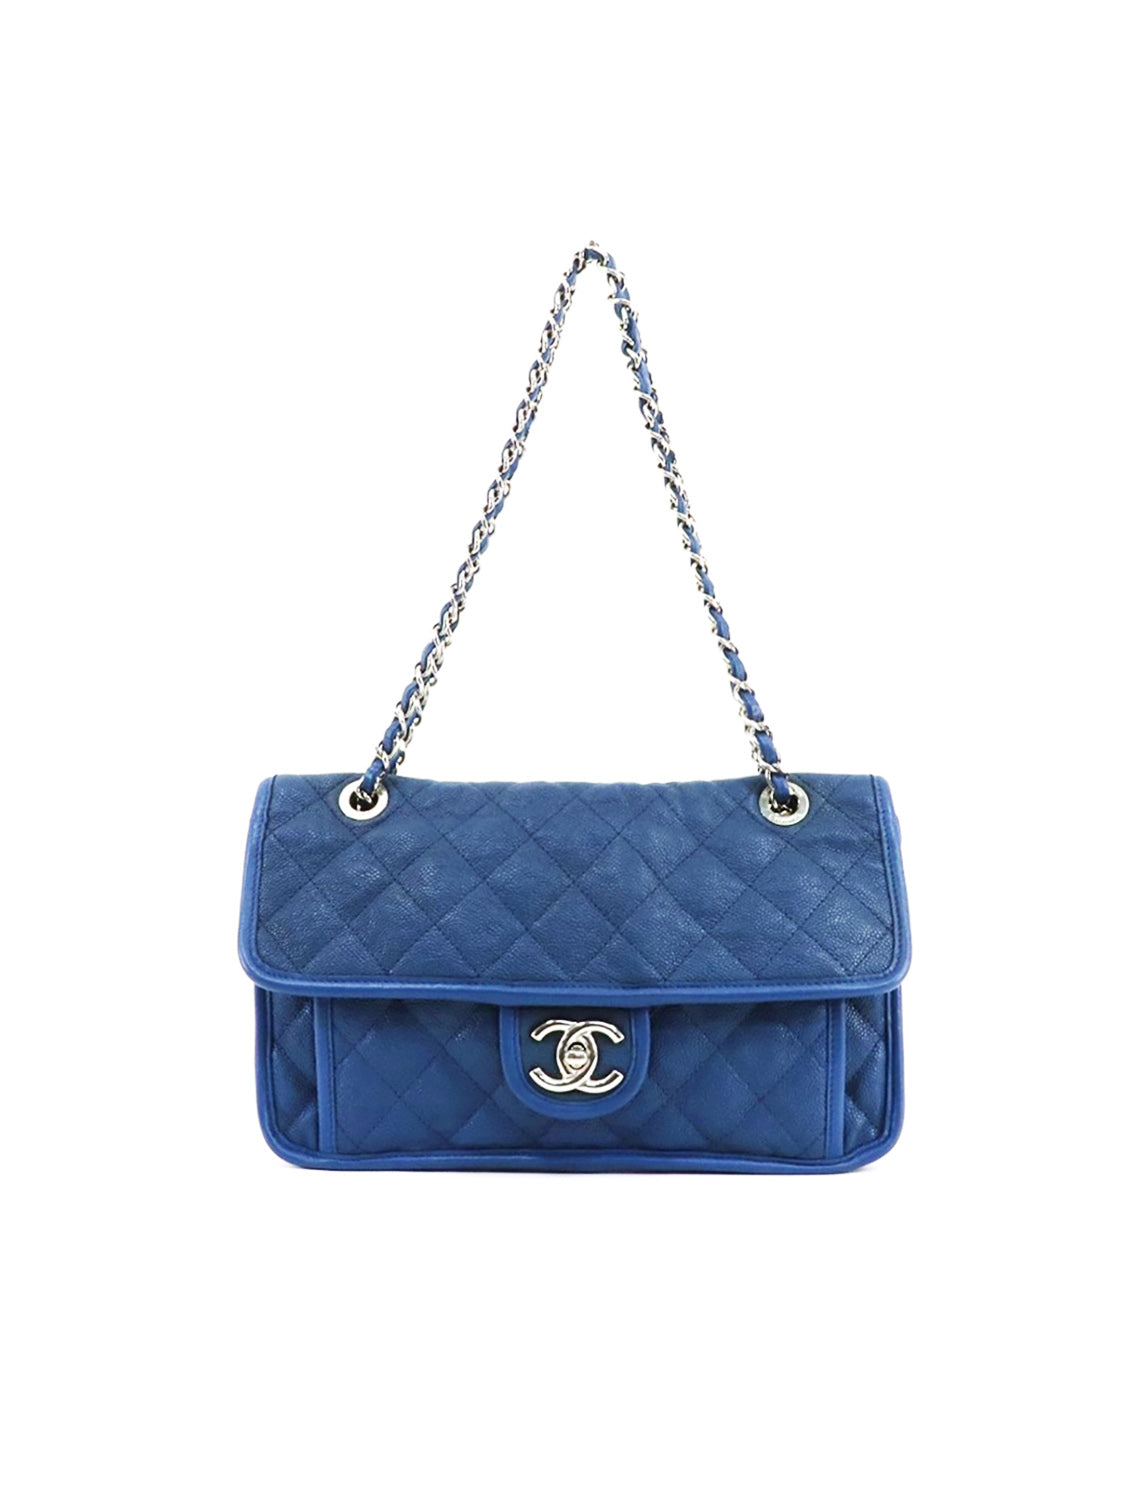 Chanel 2010s Blue Leather Trimmed Rare Handbag · INTO